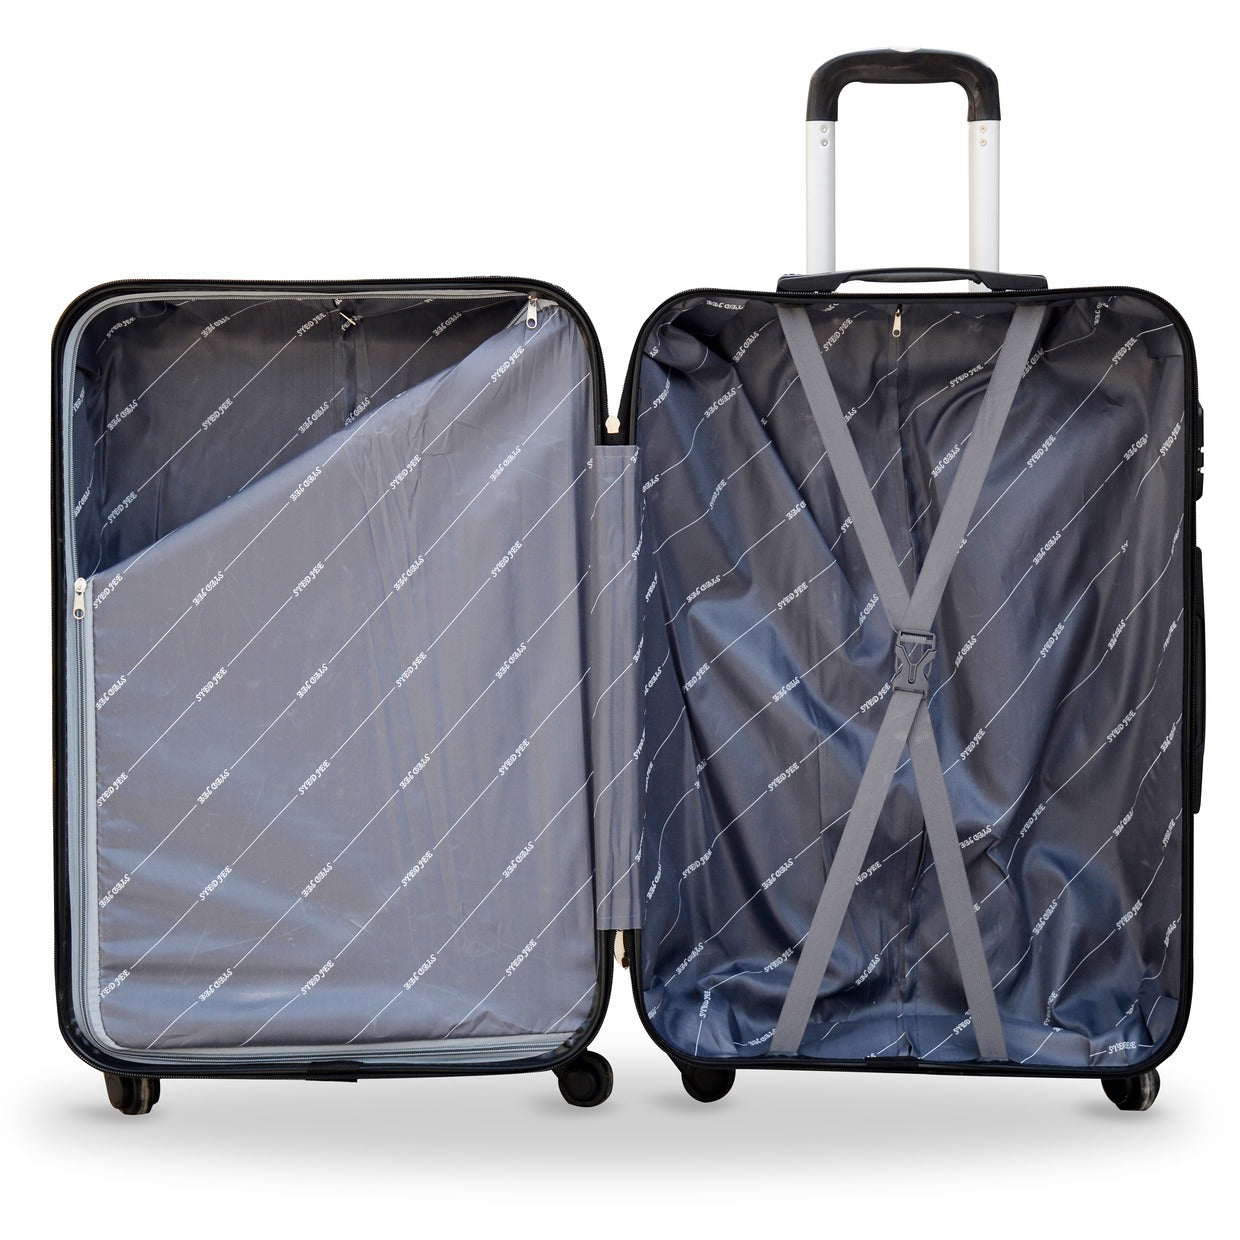 28" Blue Colour SJ ABS Luggage Lightweight Hard Case Trolley Bag